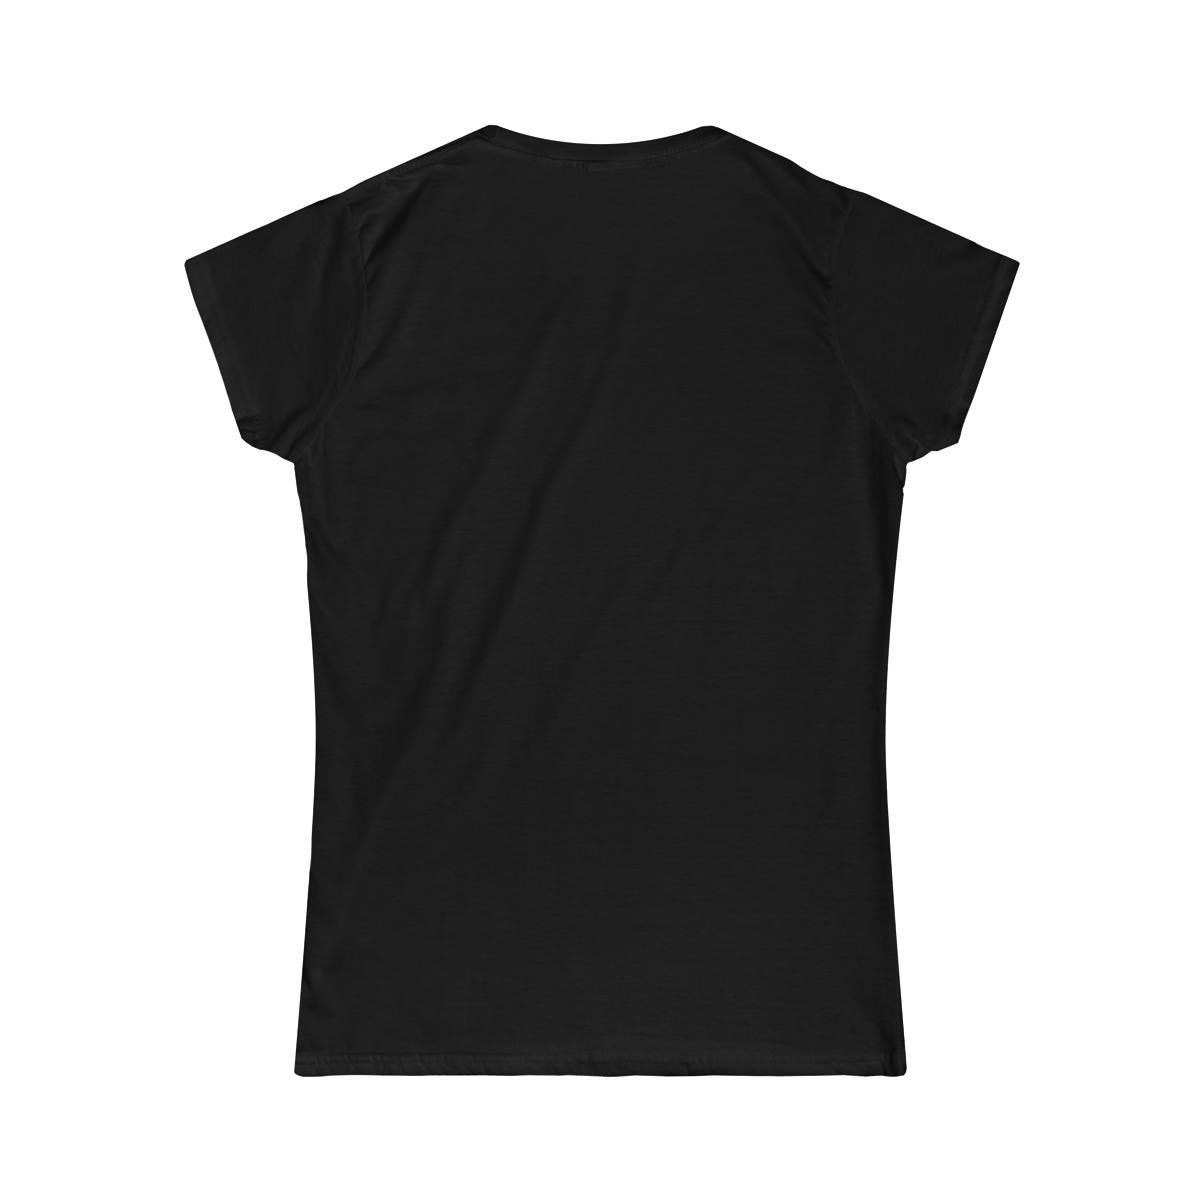 BioGenesis – Black Widow Women’s Short Sleeve Tshirt